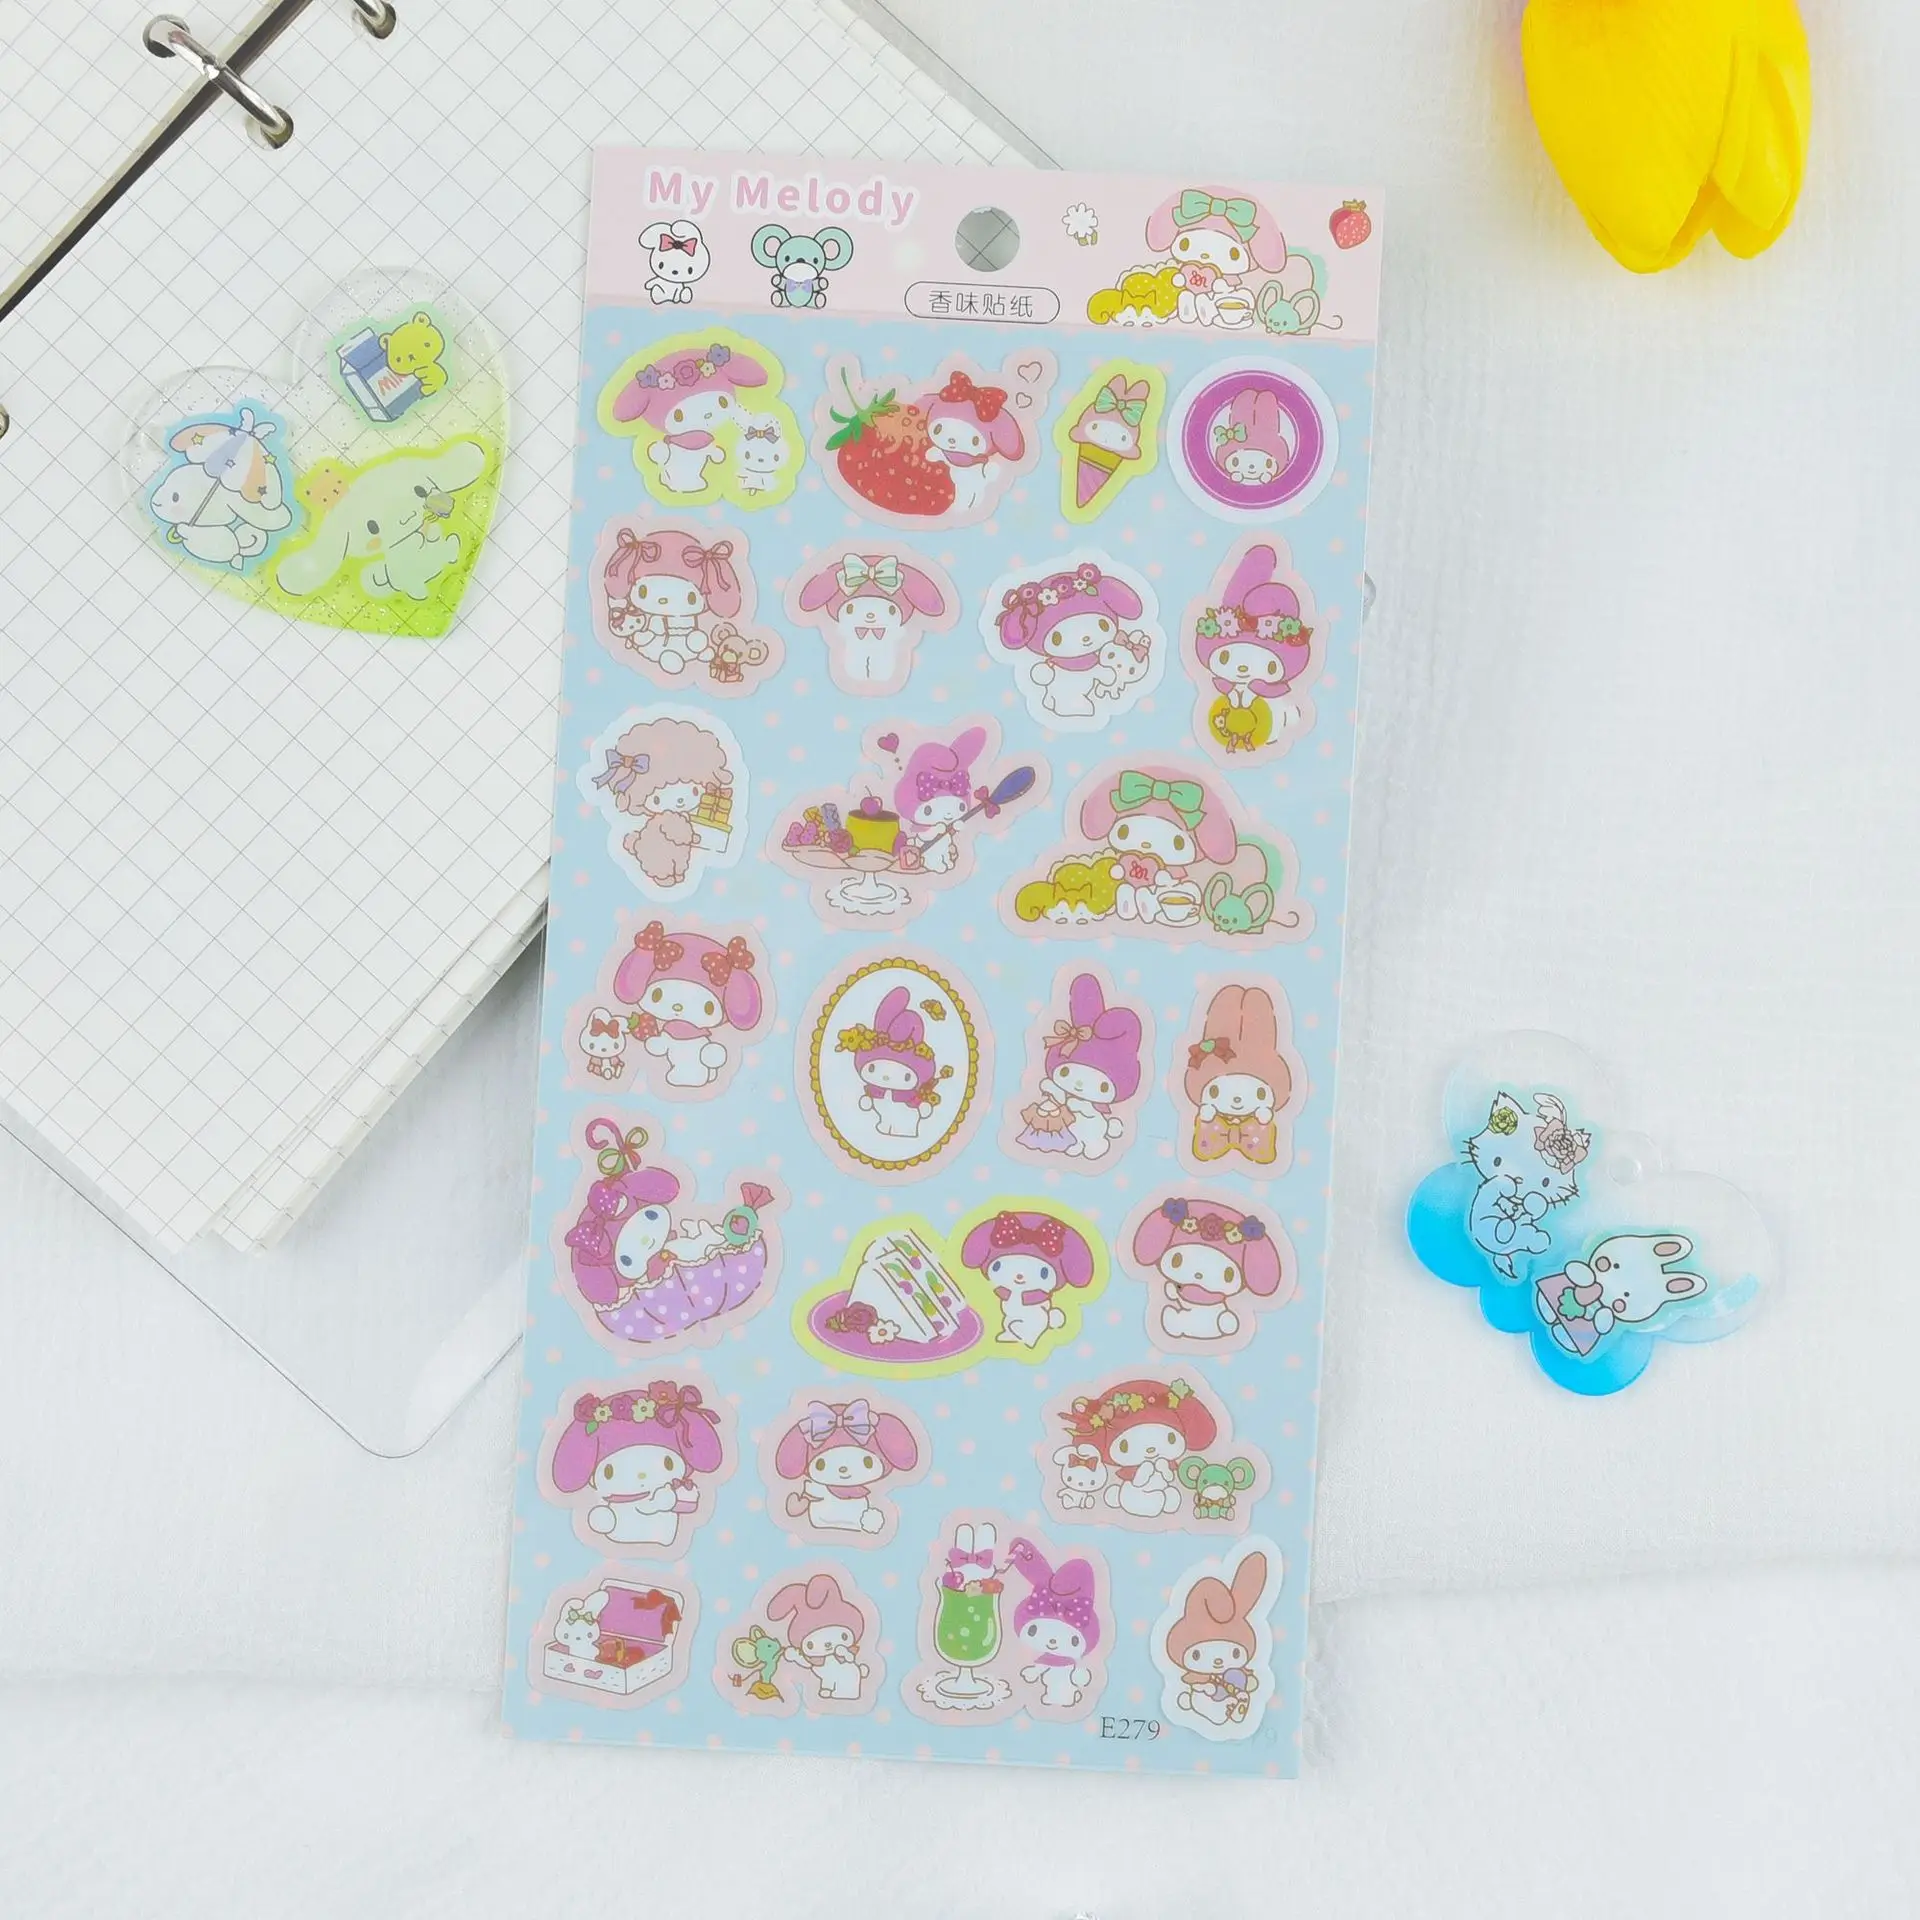 Cute Hello Kitty Sticker Set | Magnet